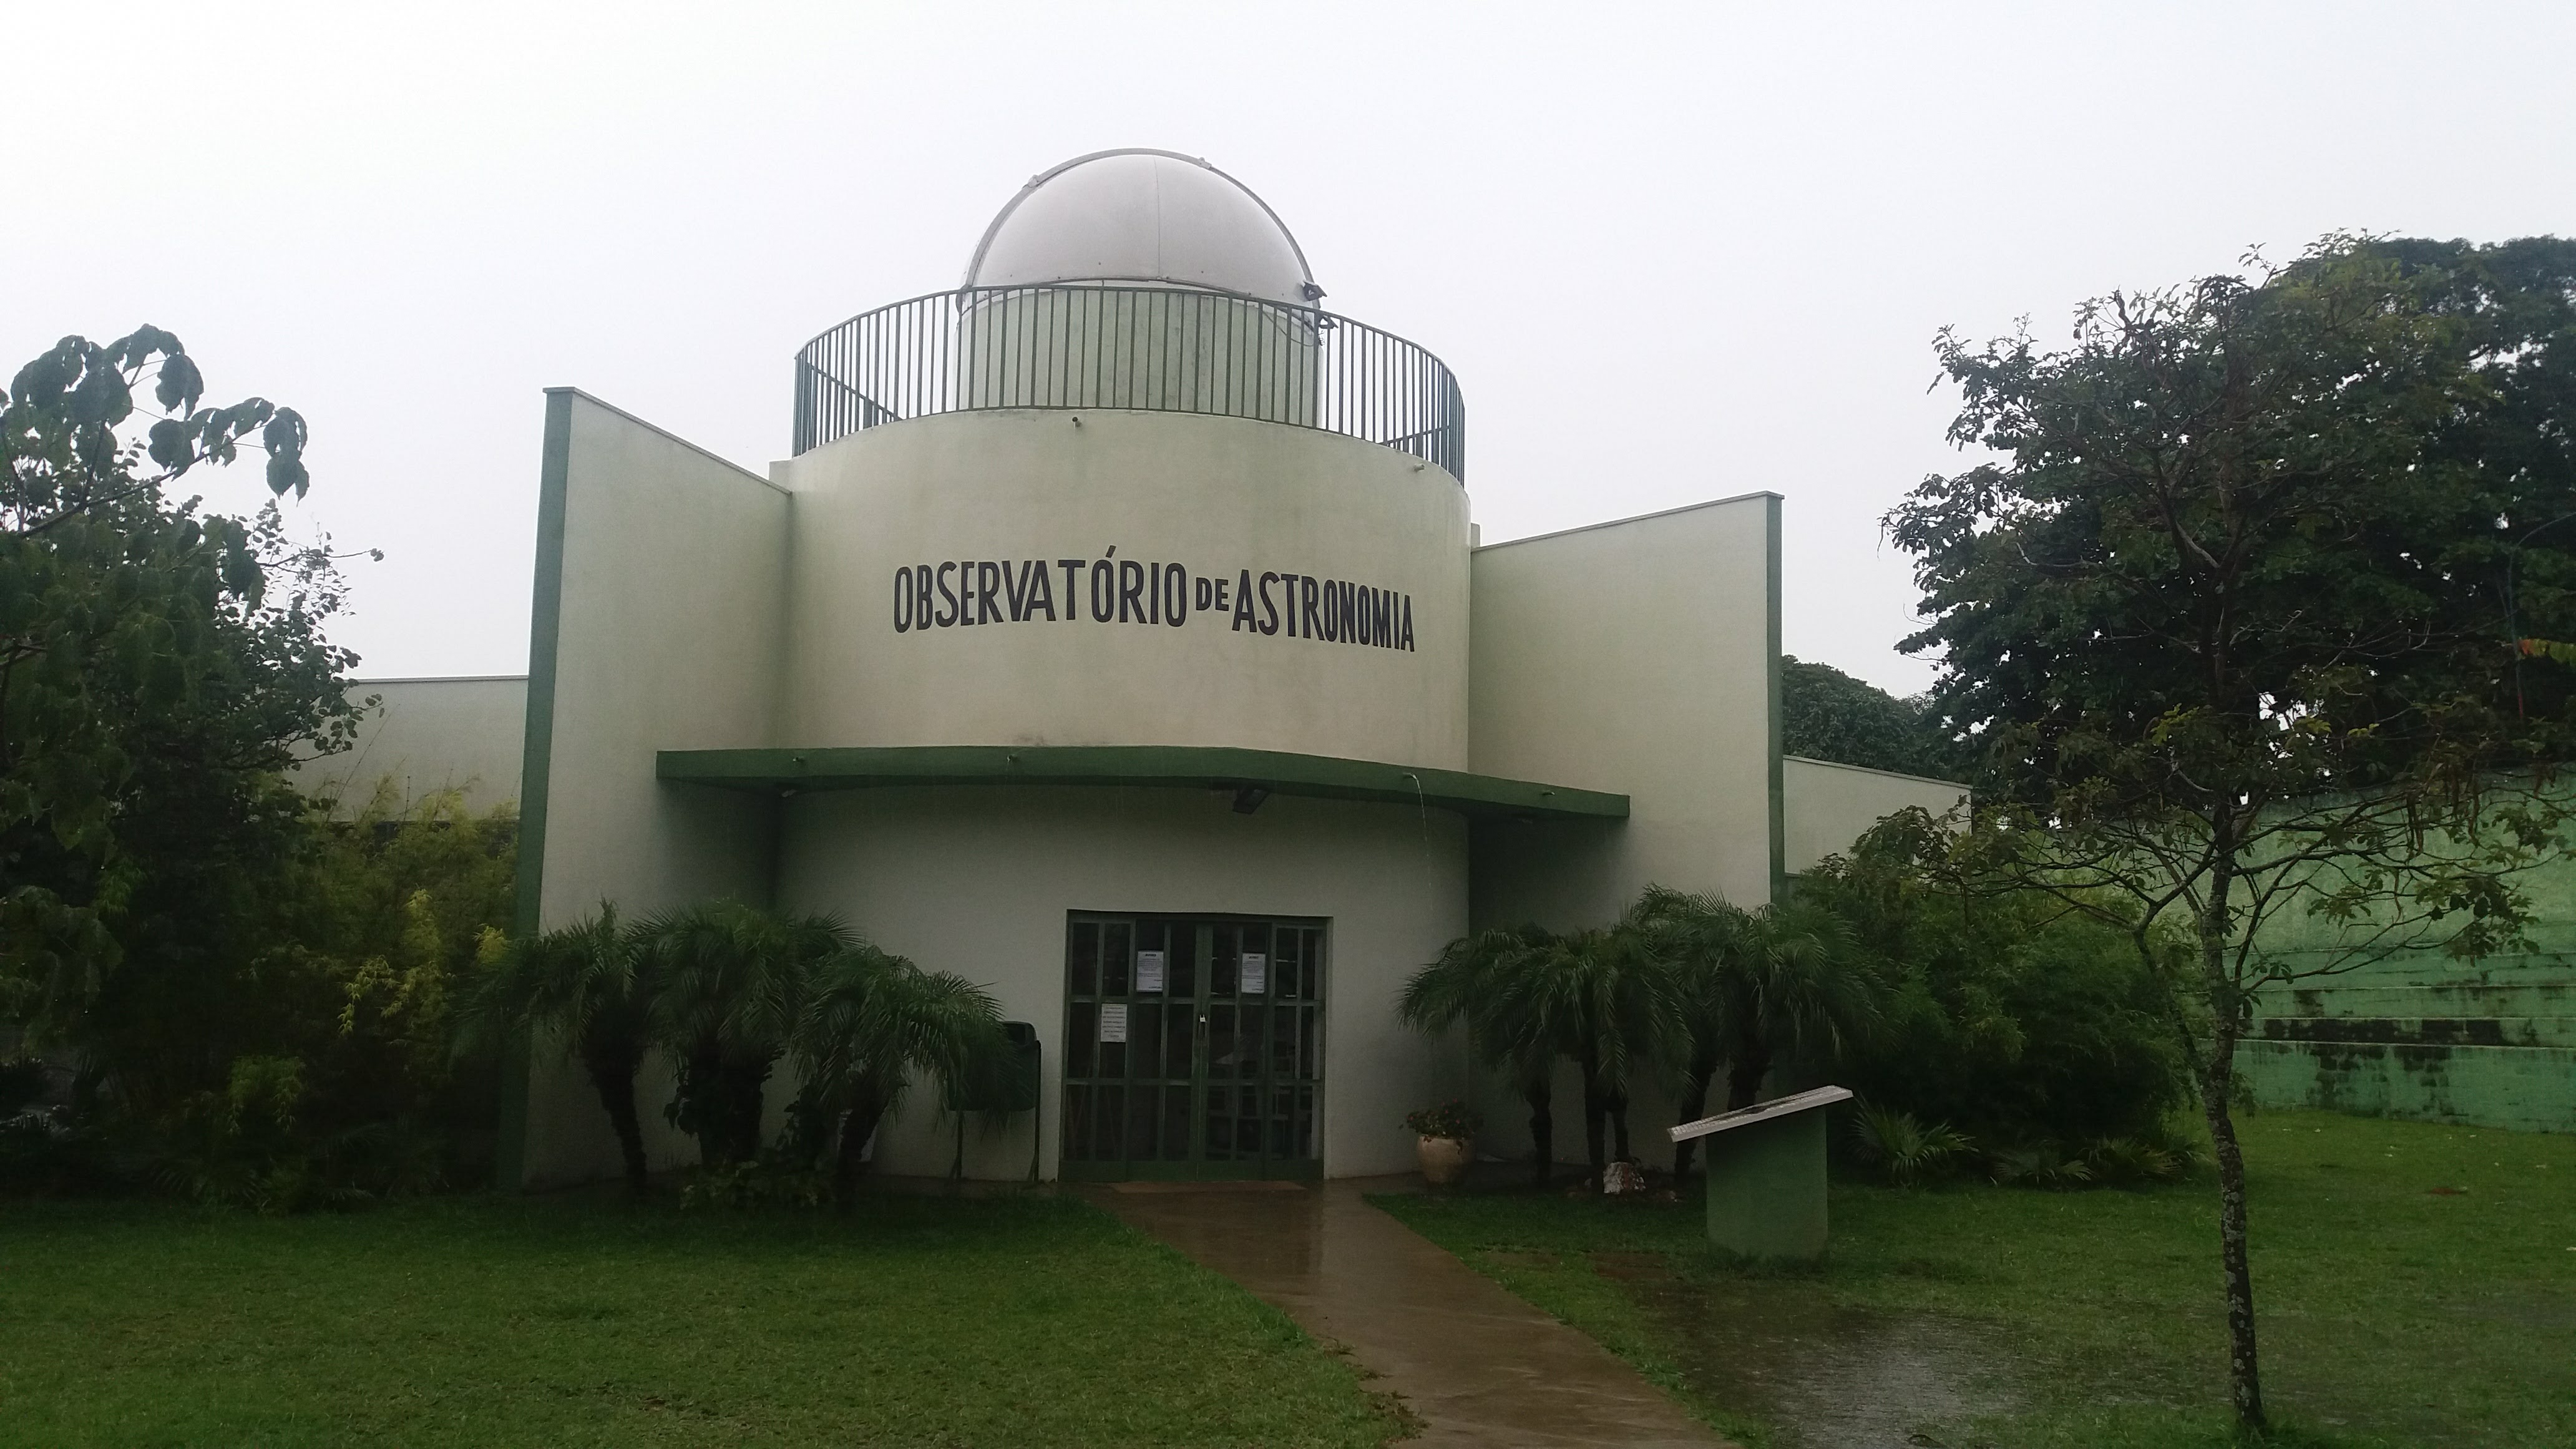 Observatorio de Astronomia Franca SP Brazil original